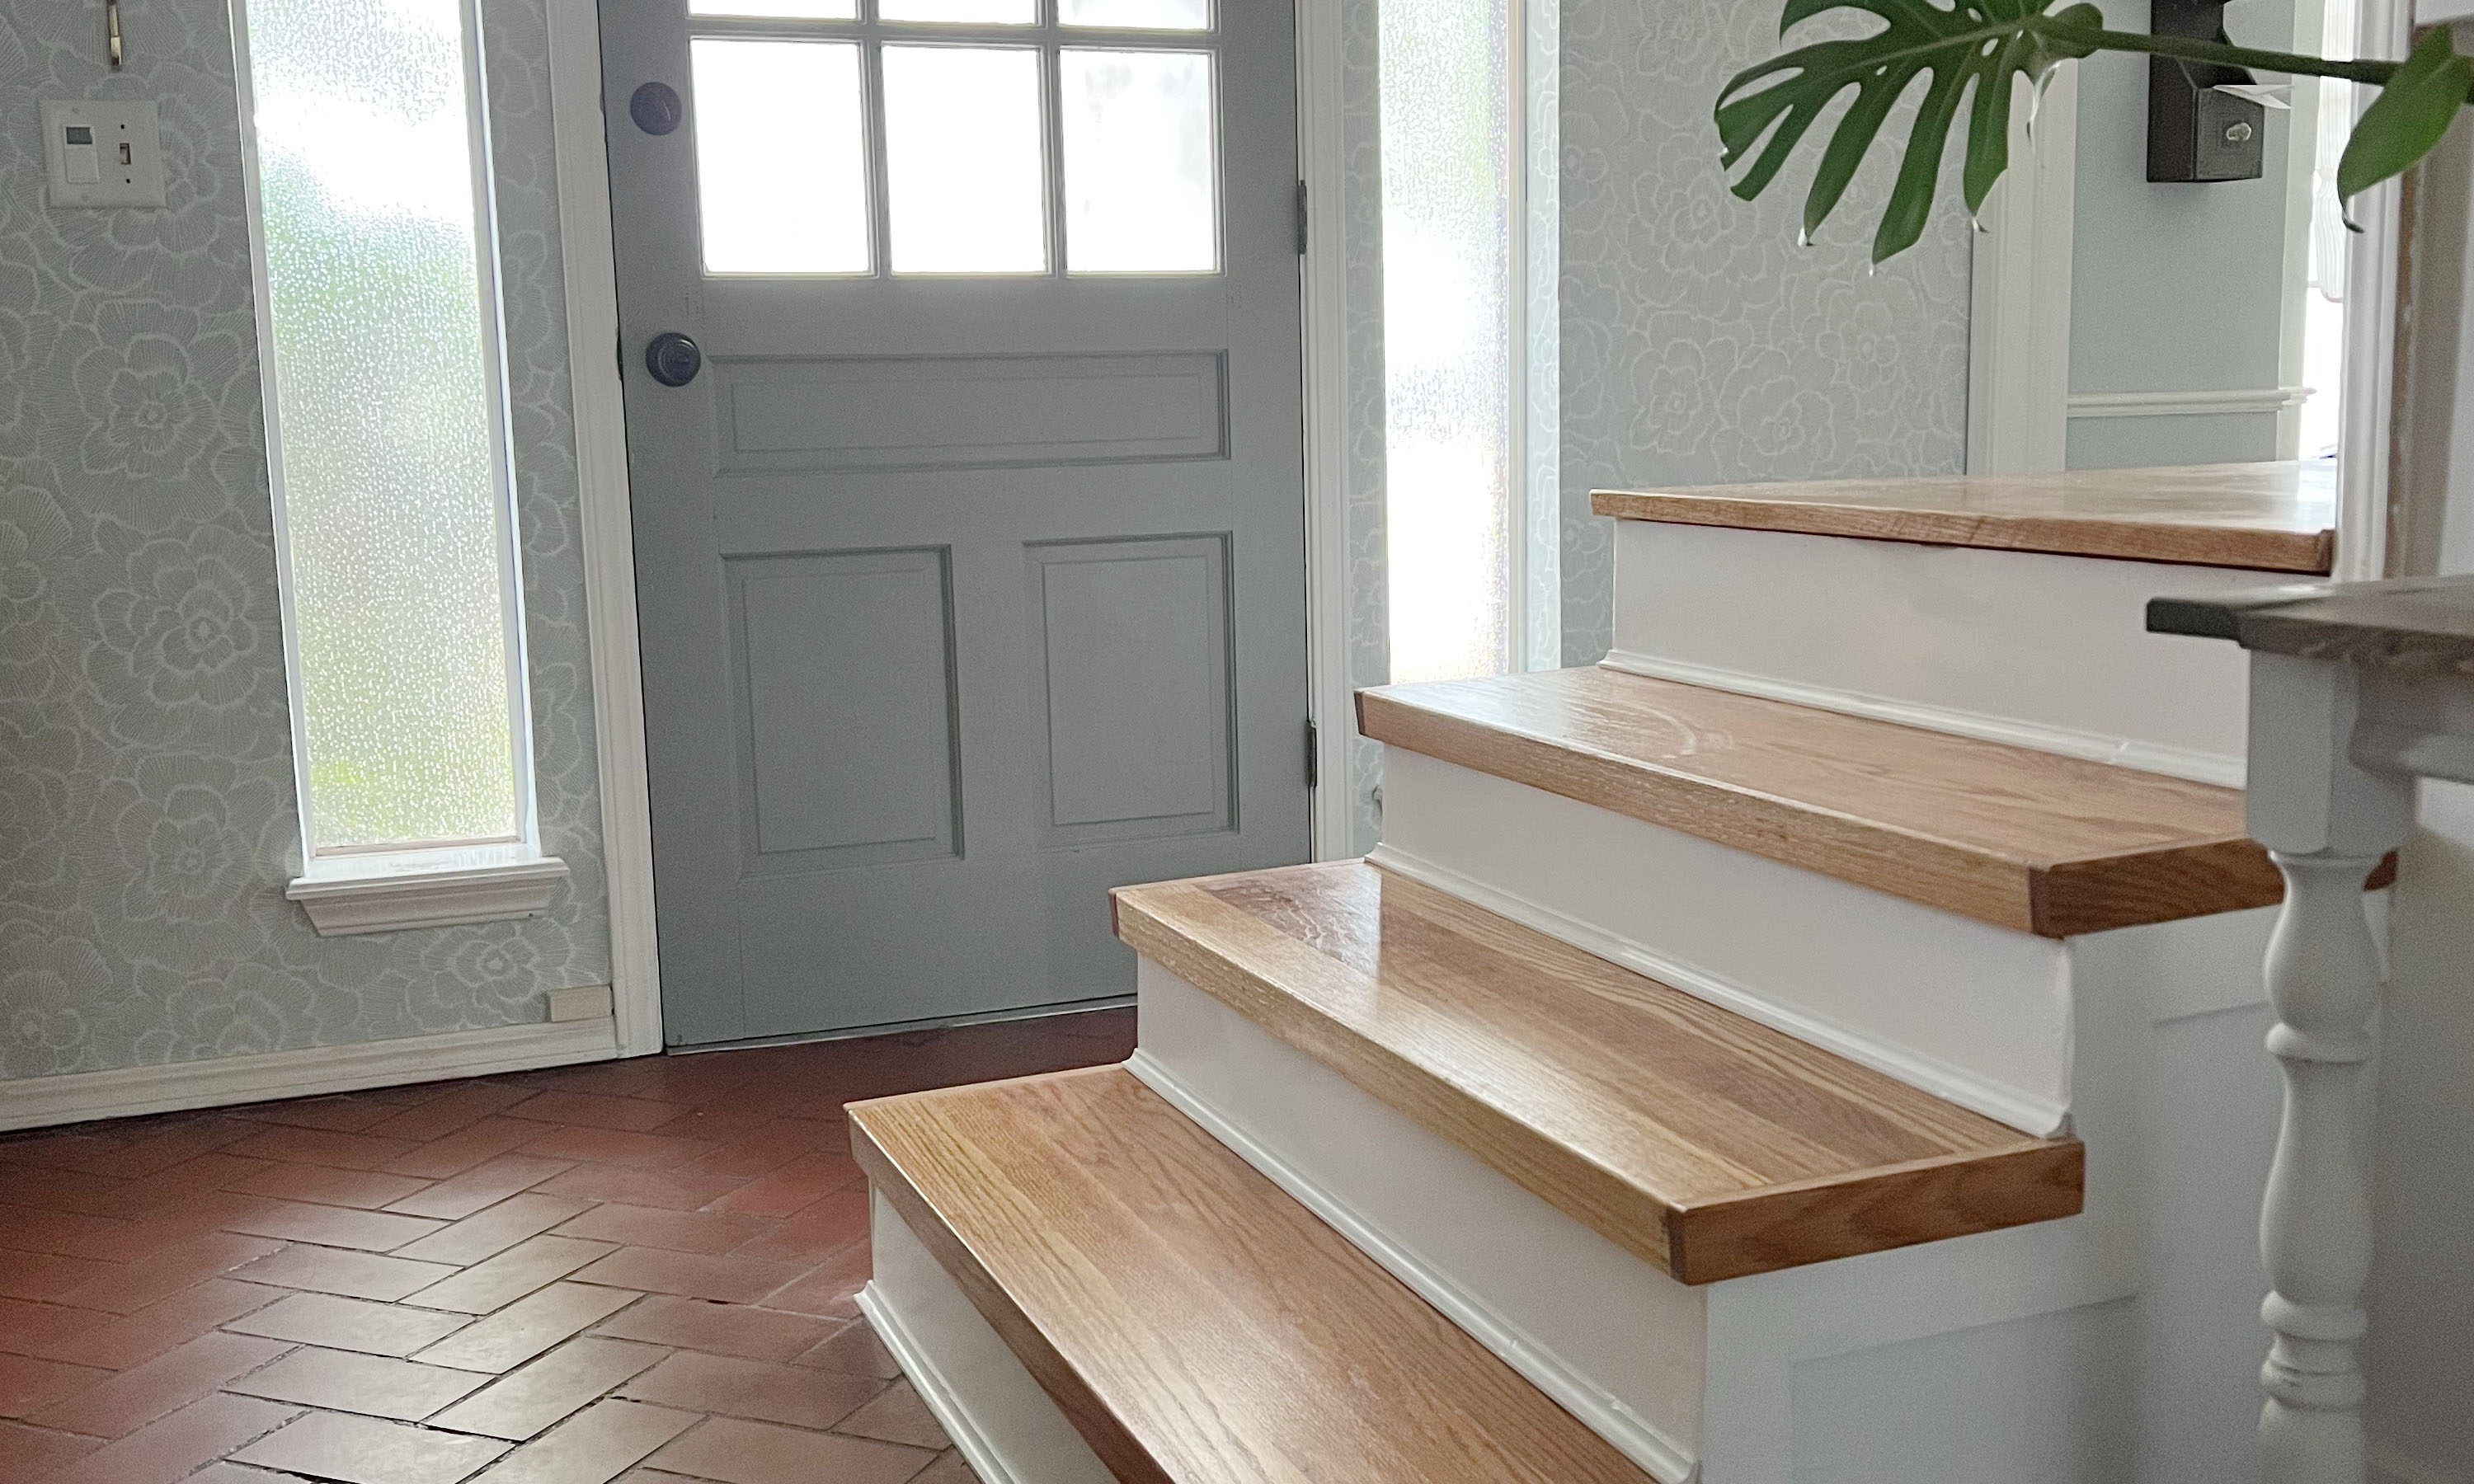 How to Build Stairs  Hardwood Lumber Company